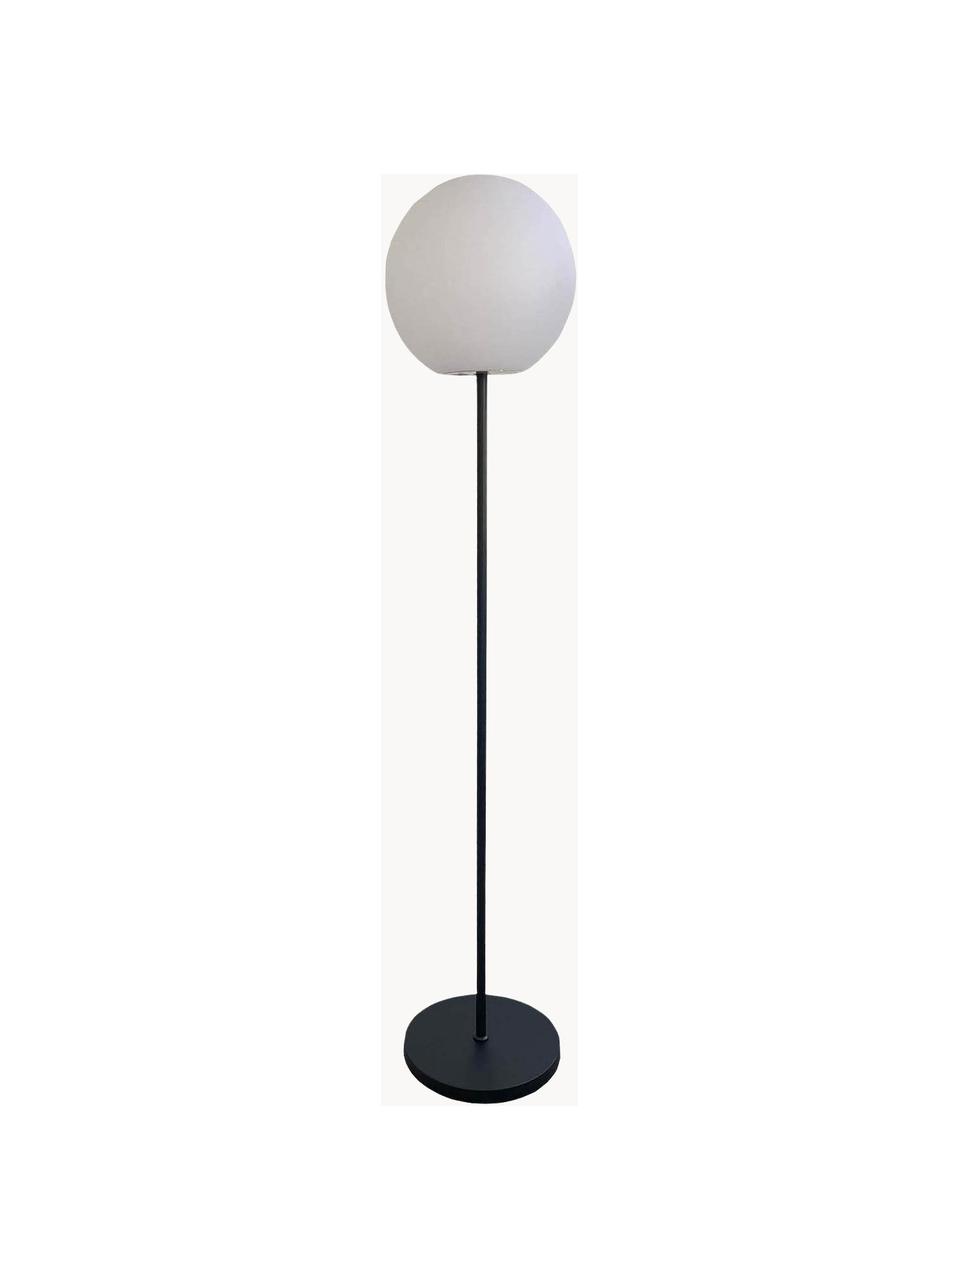 Mobile dimmbare Outdoor-Stehlampe Luny, Lampenschirm: Polyethylen, Weiss, Schwarz, Ø 30 x H 150 cm